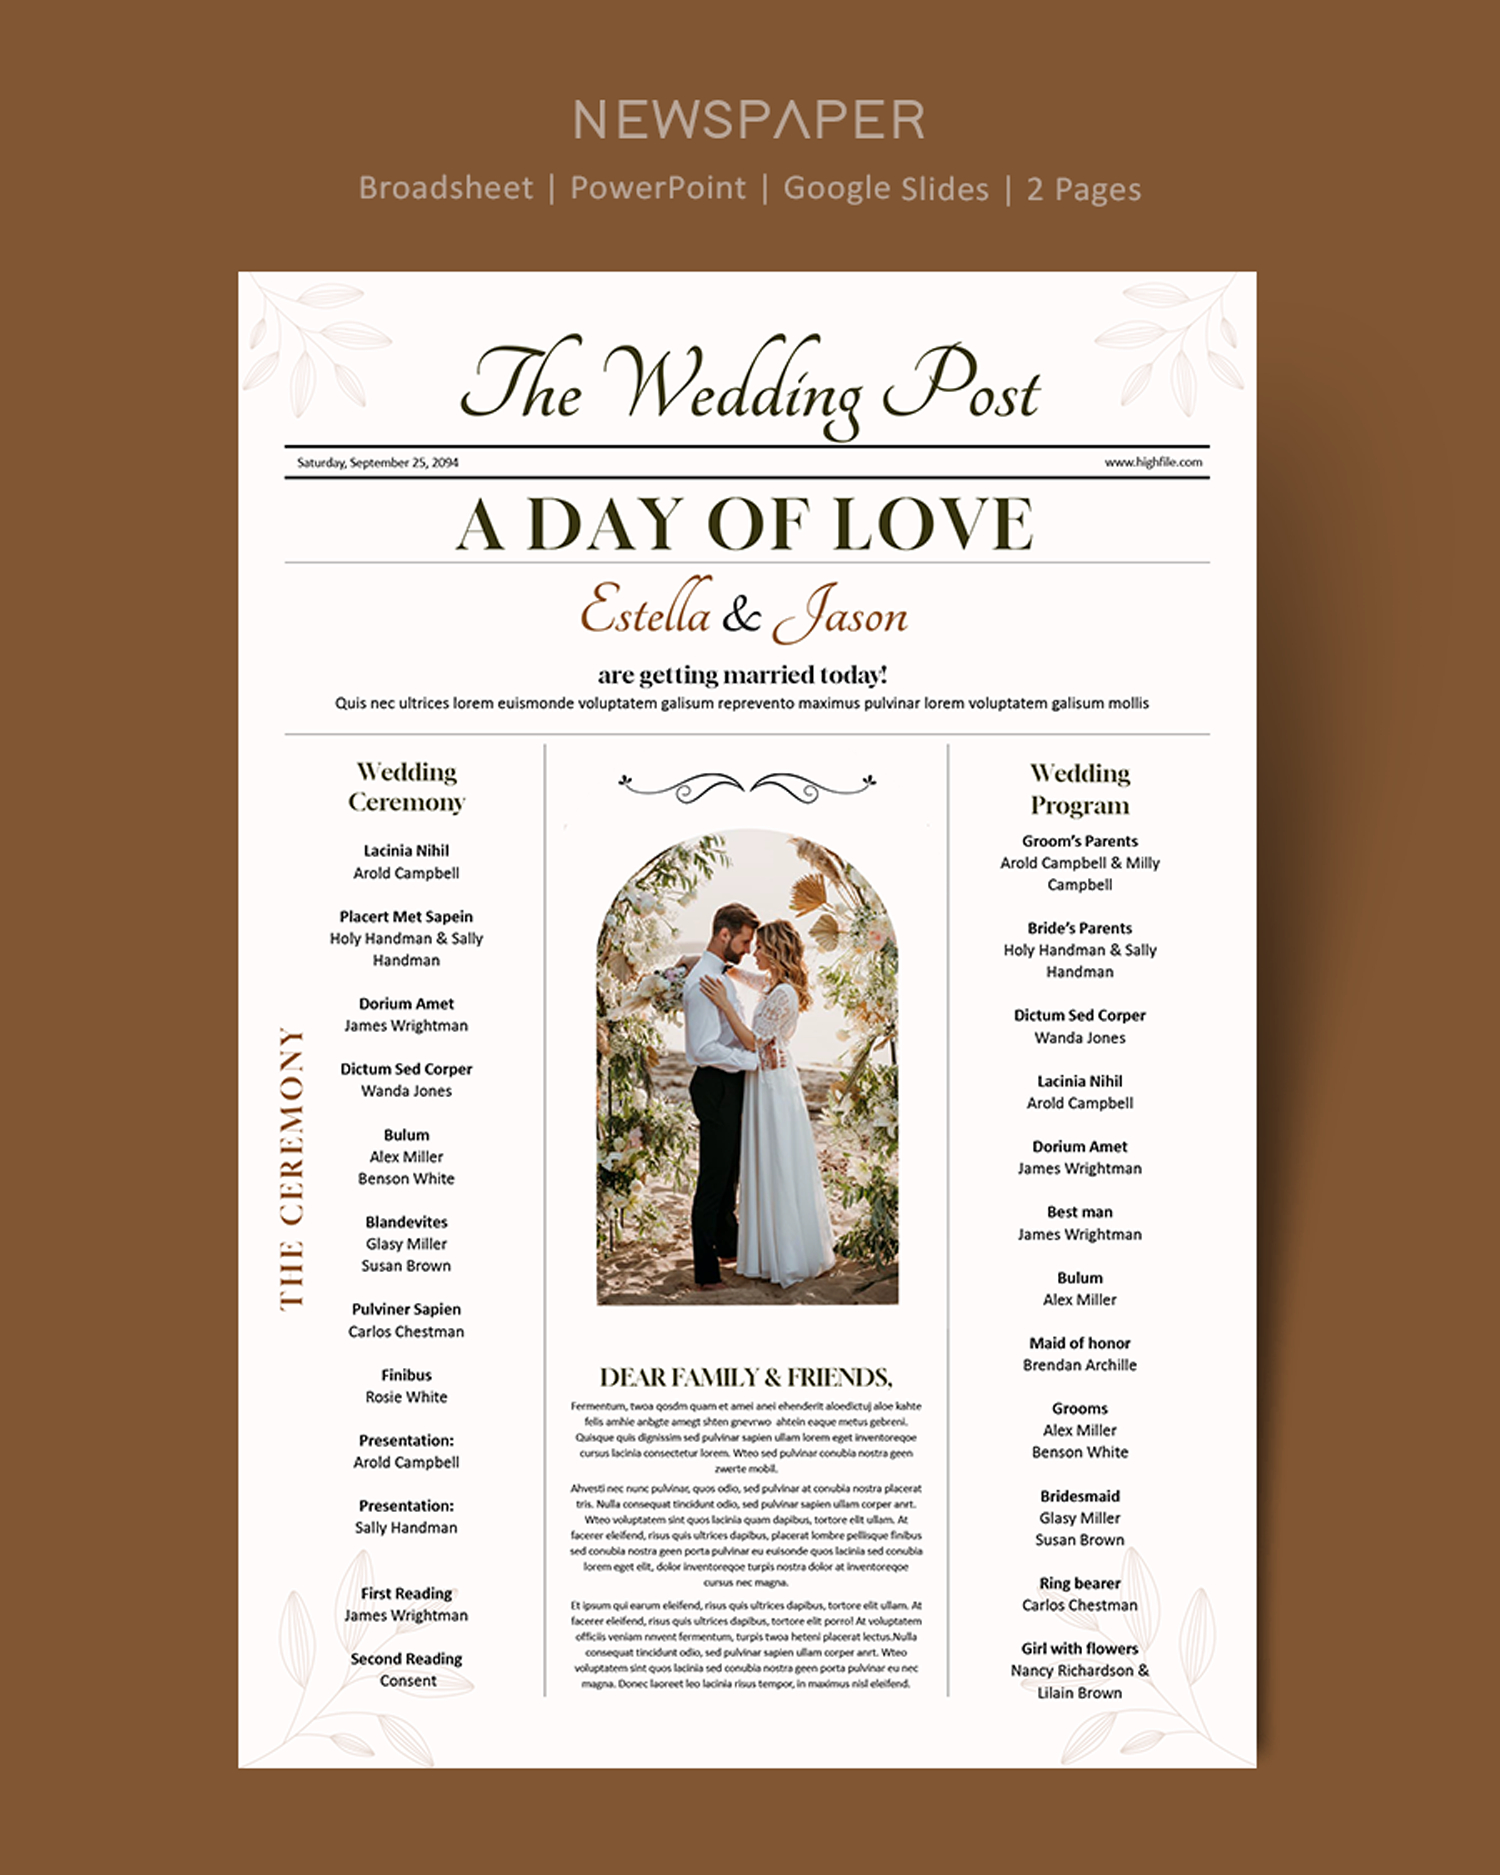 Broadsheet Newspaper Wedding Program Template - PowerPoint, Google Slides